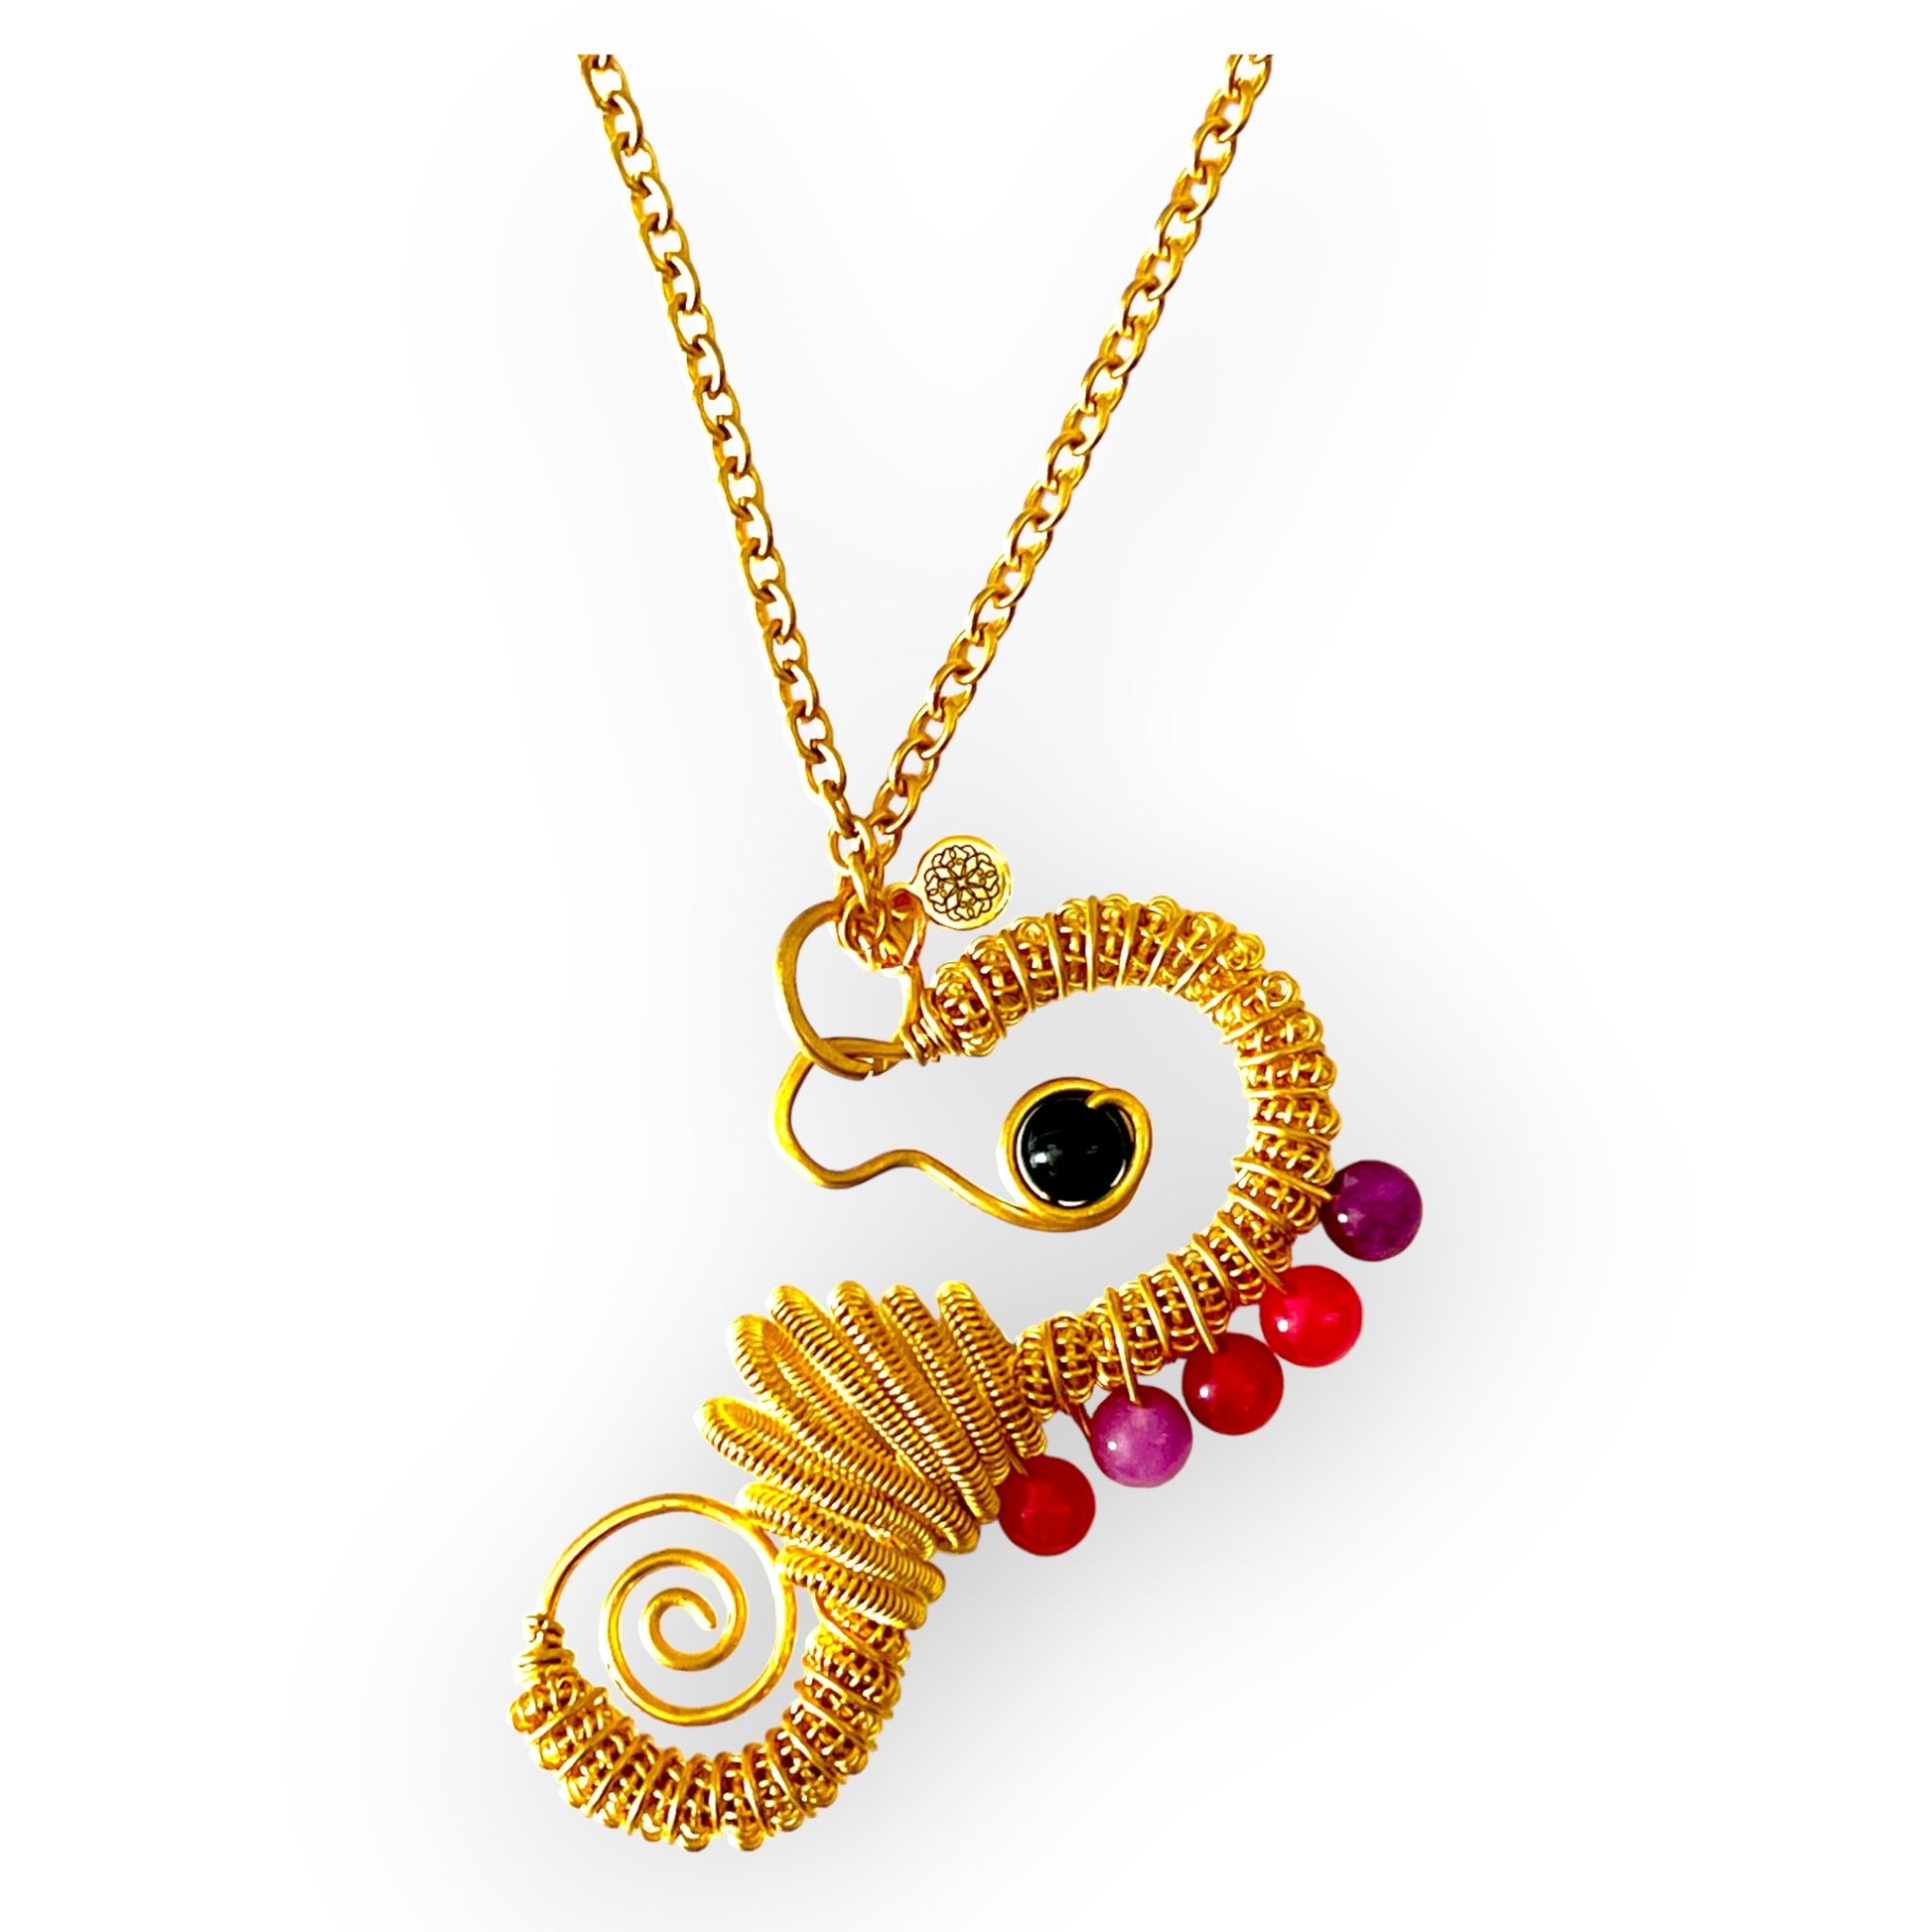 Sea horse pink gemstone pendant necklace - Sundara Joon